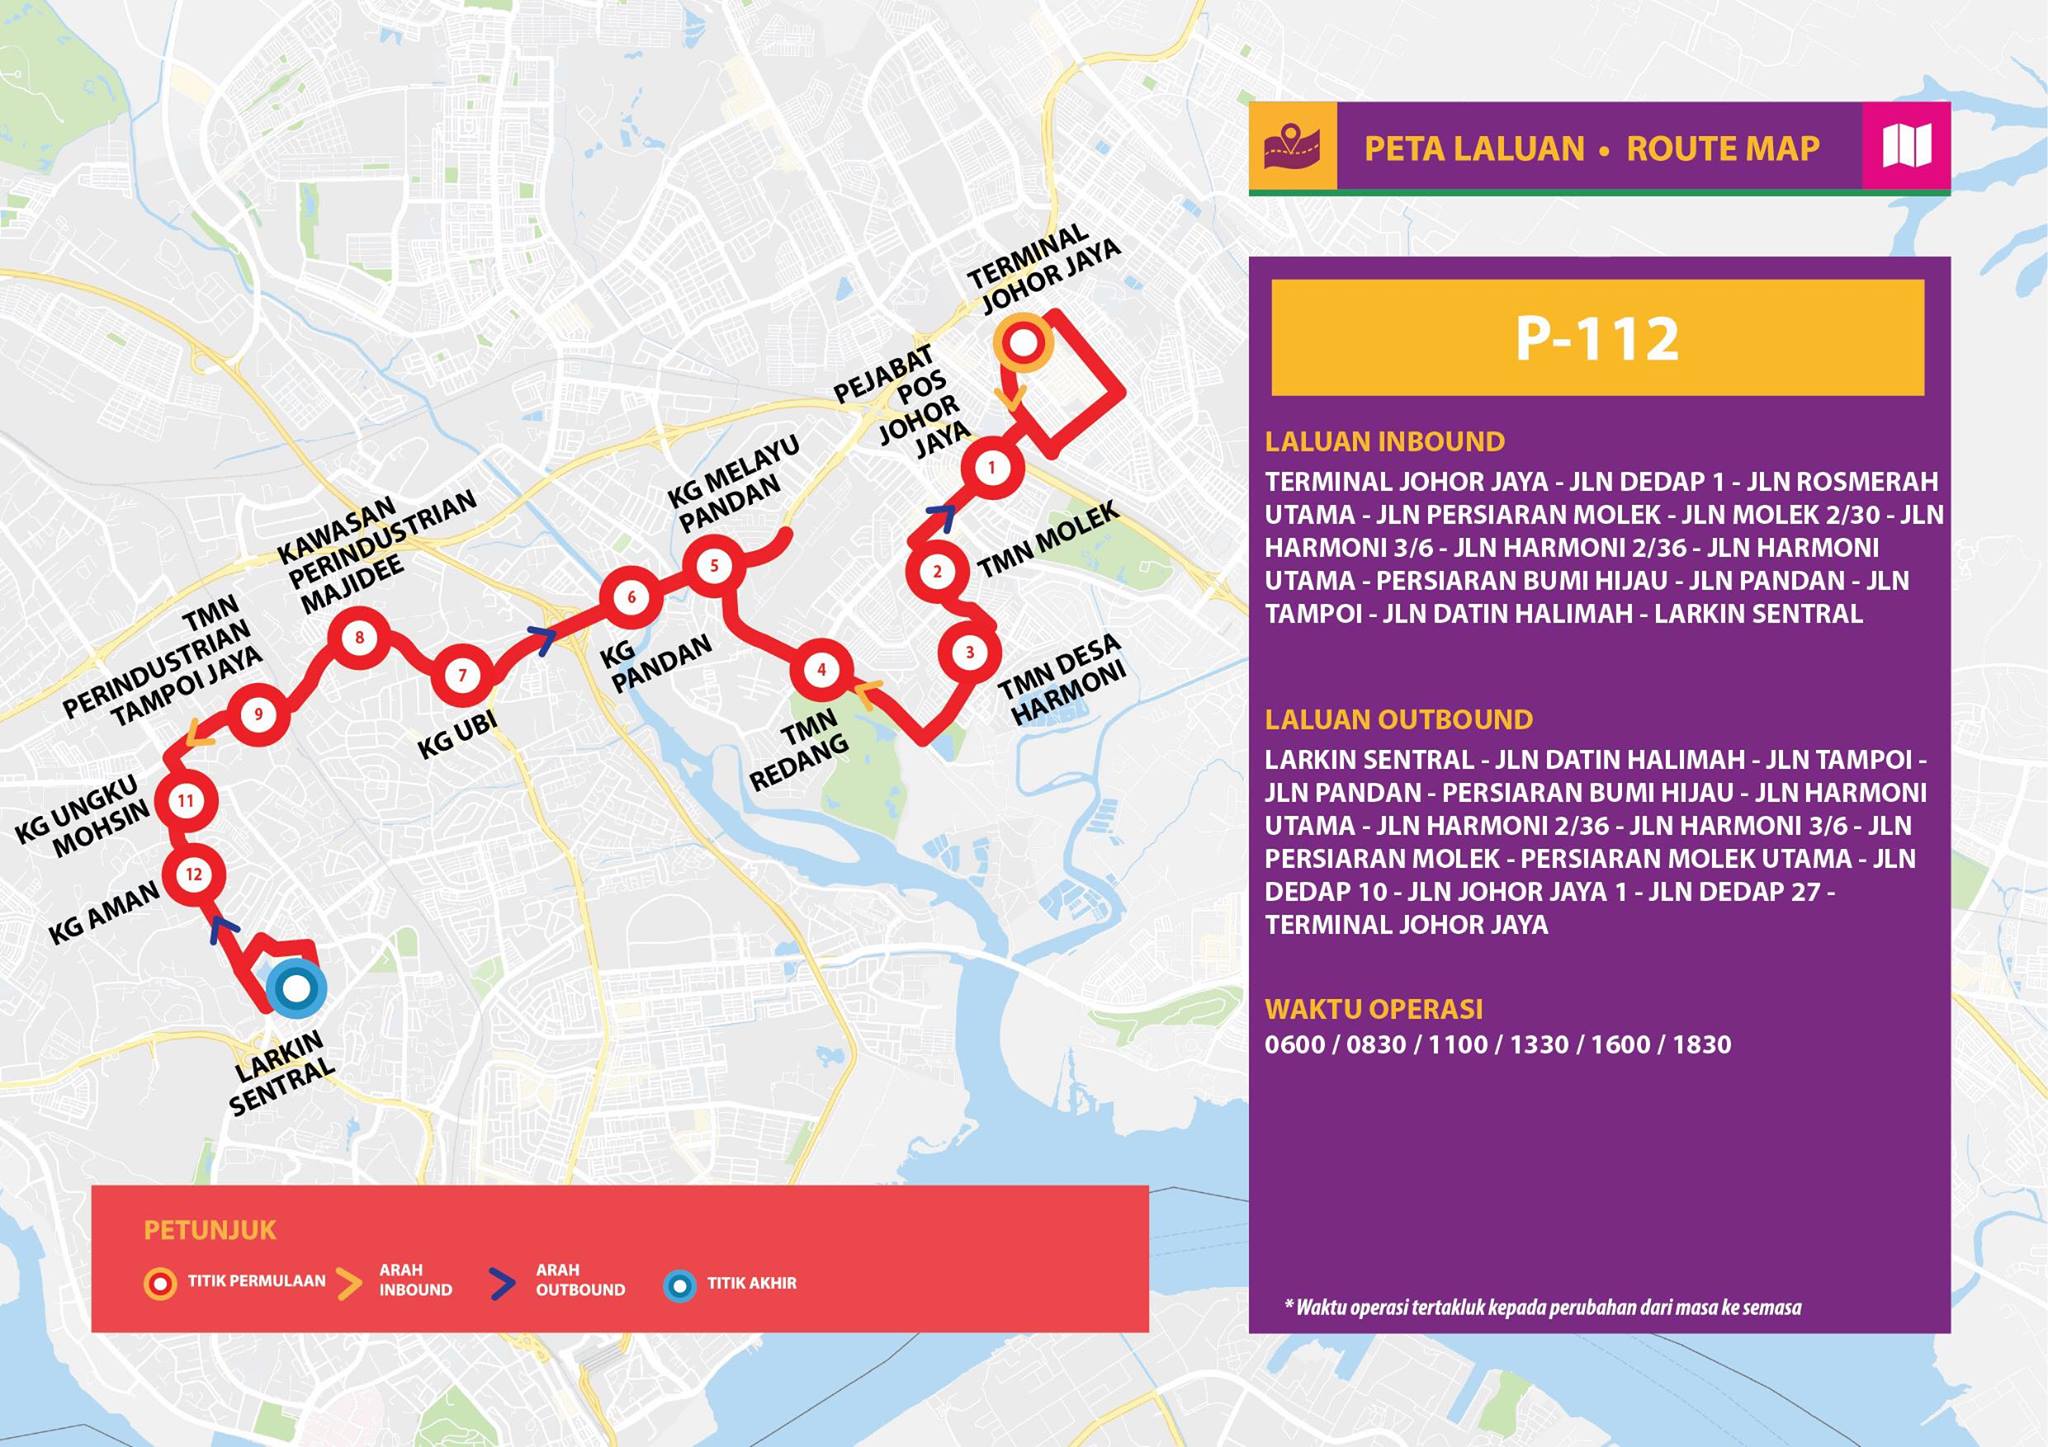 Bas Muafakat Johor P112 route map effective from 1 November 2018.